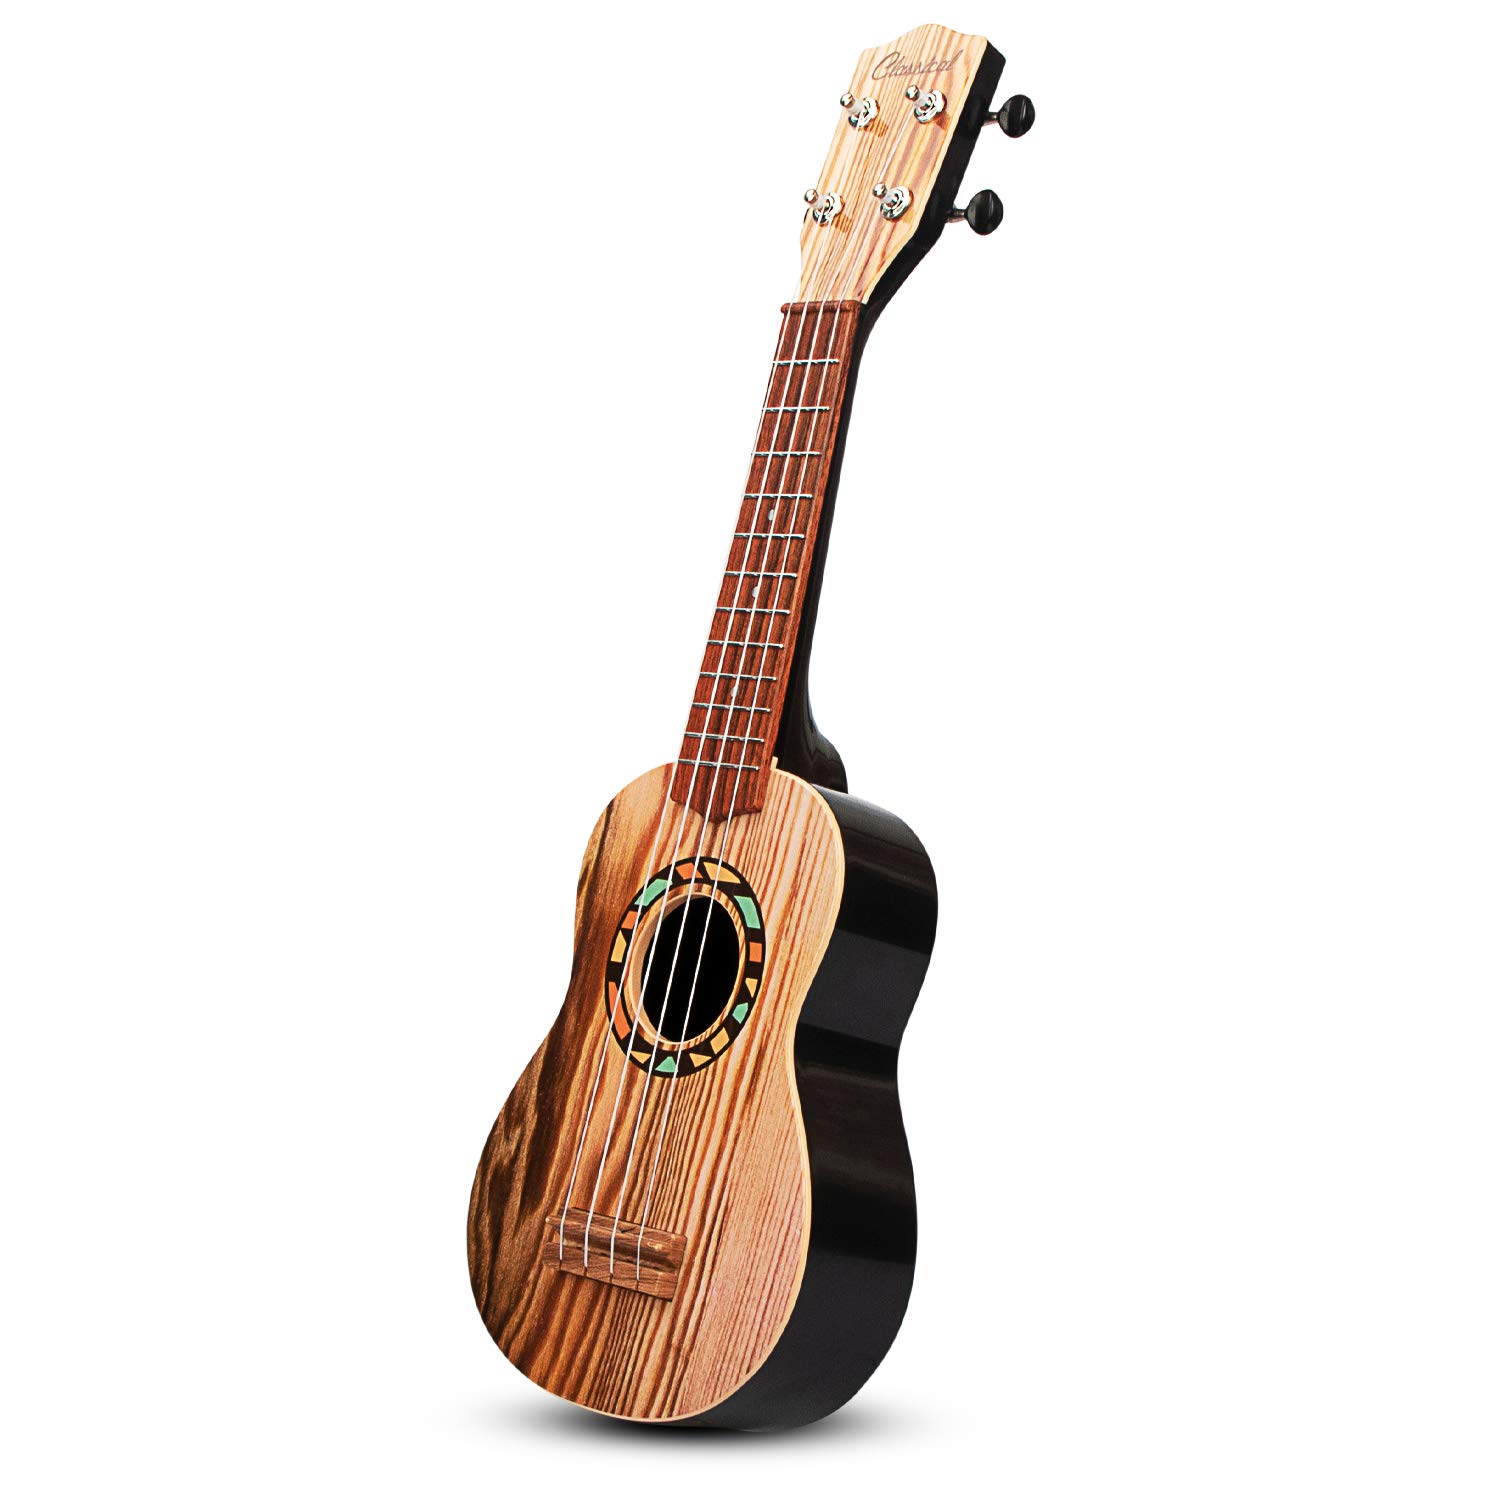 aPerfectLife 21" Kids Ukulele Guitar Toy 4 Strings Mini Guitar Children Musical Instruments Educational Learning Toys